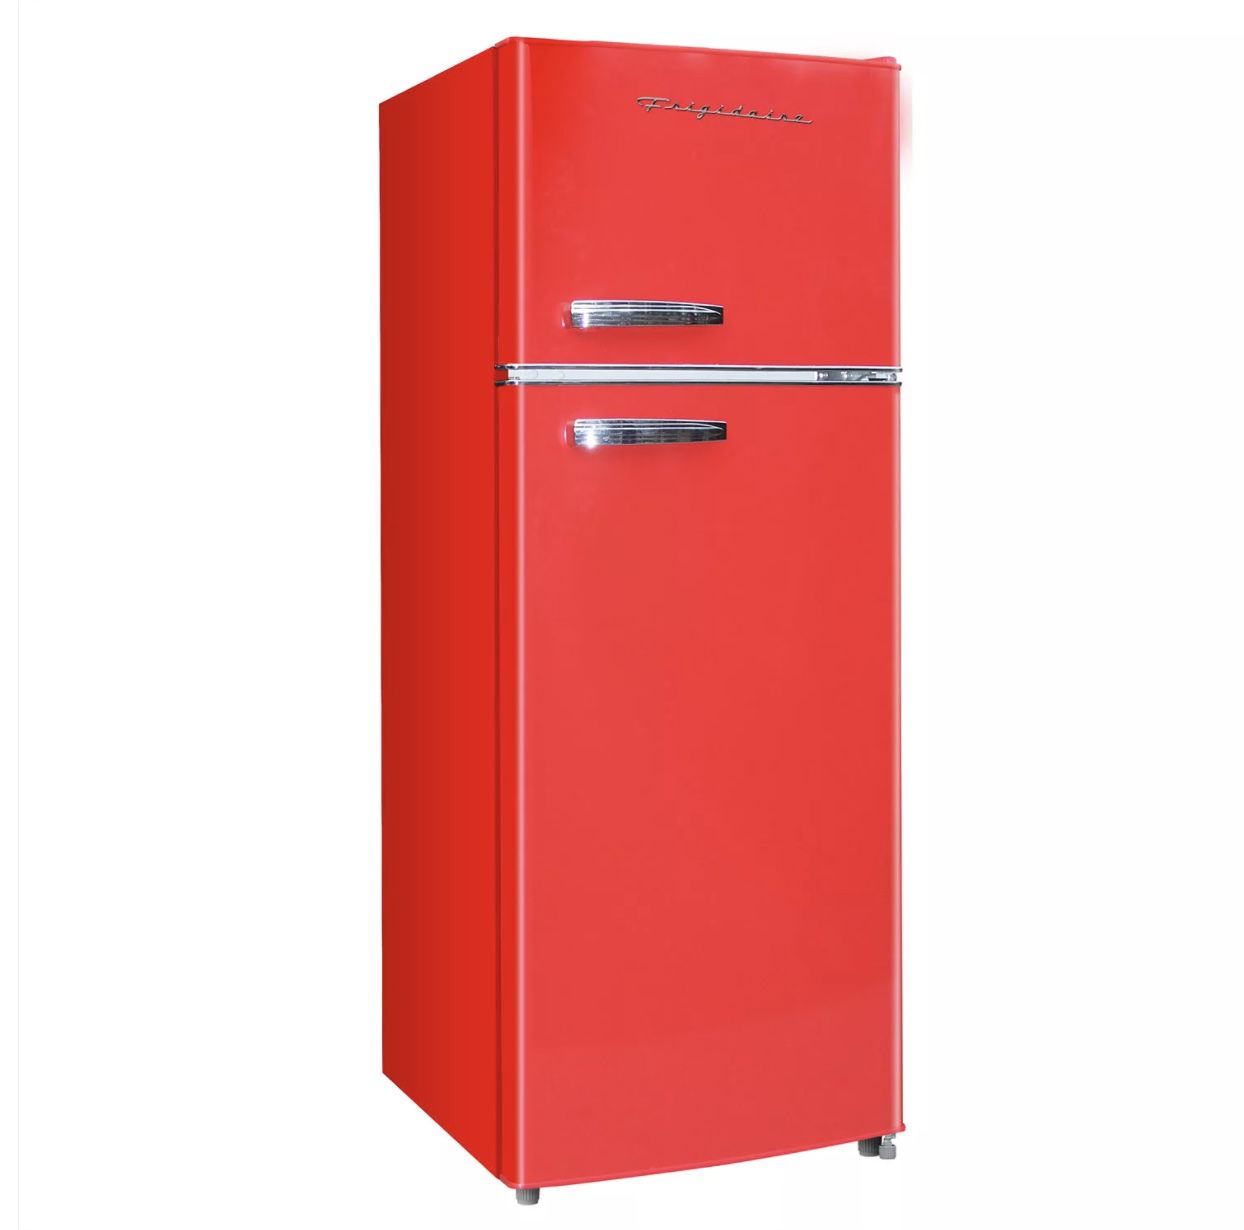 New in Box Frigidaire 7.5 cu ft Retro Refrigerator with Freezer Red